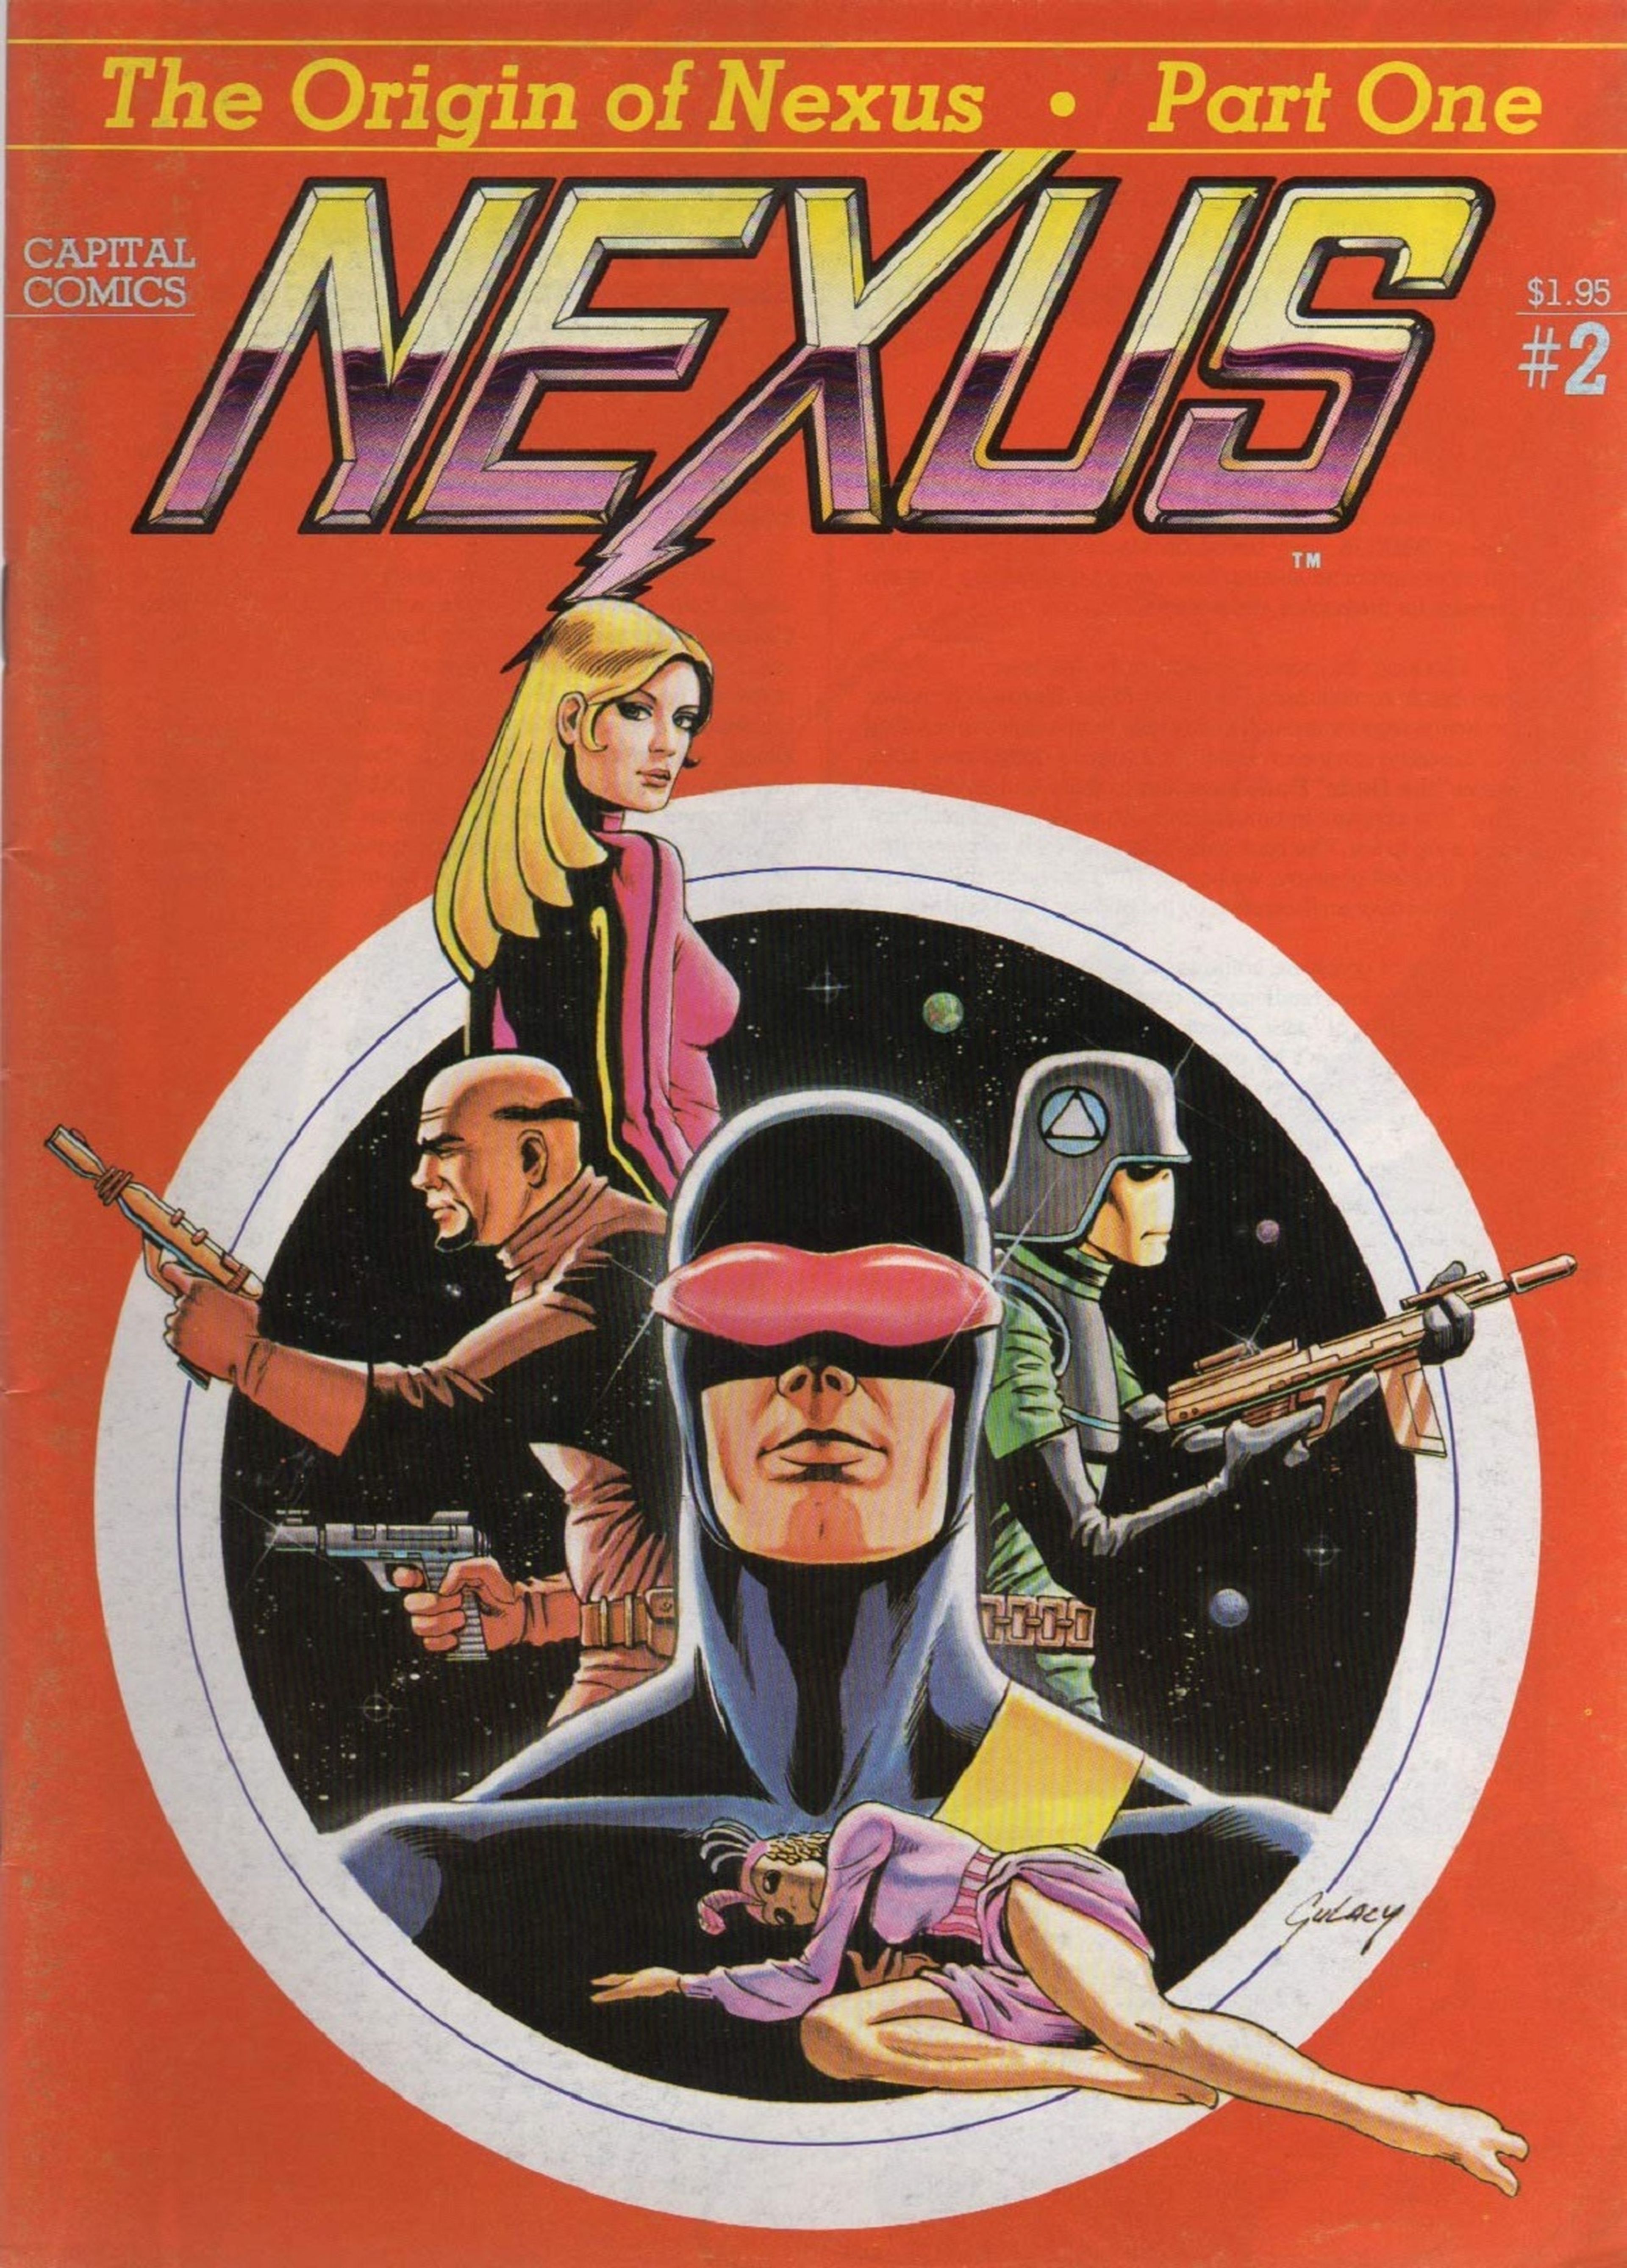 Nexus (cómic)